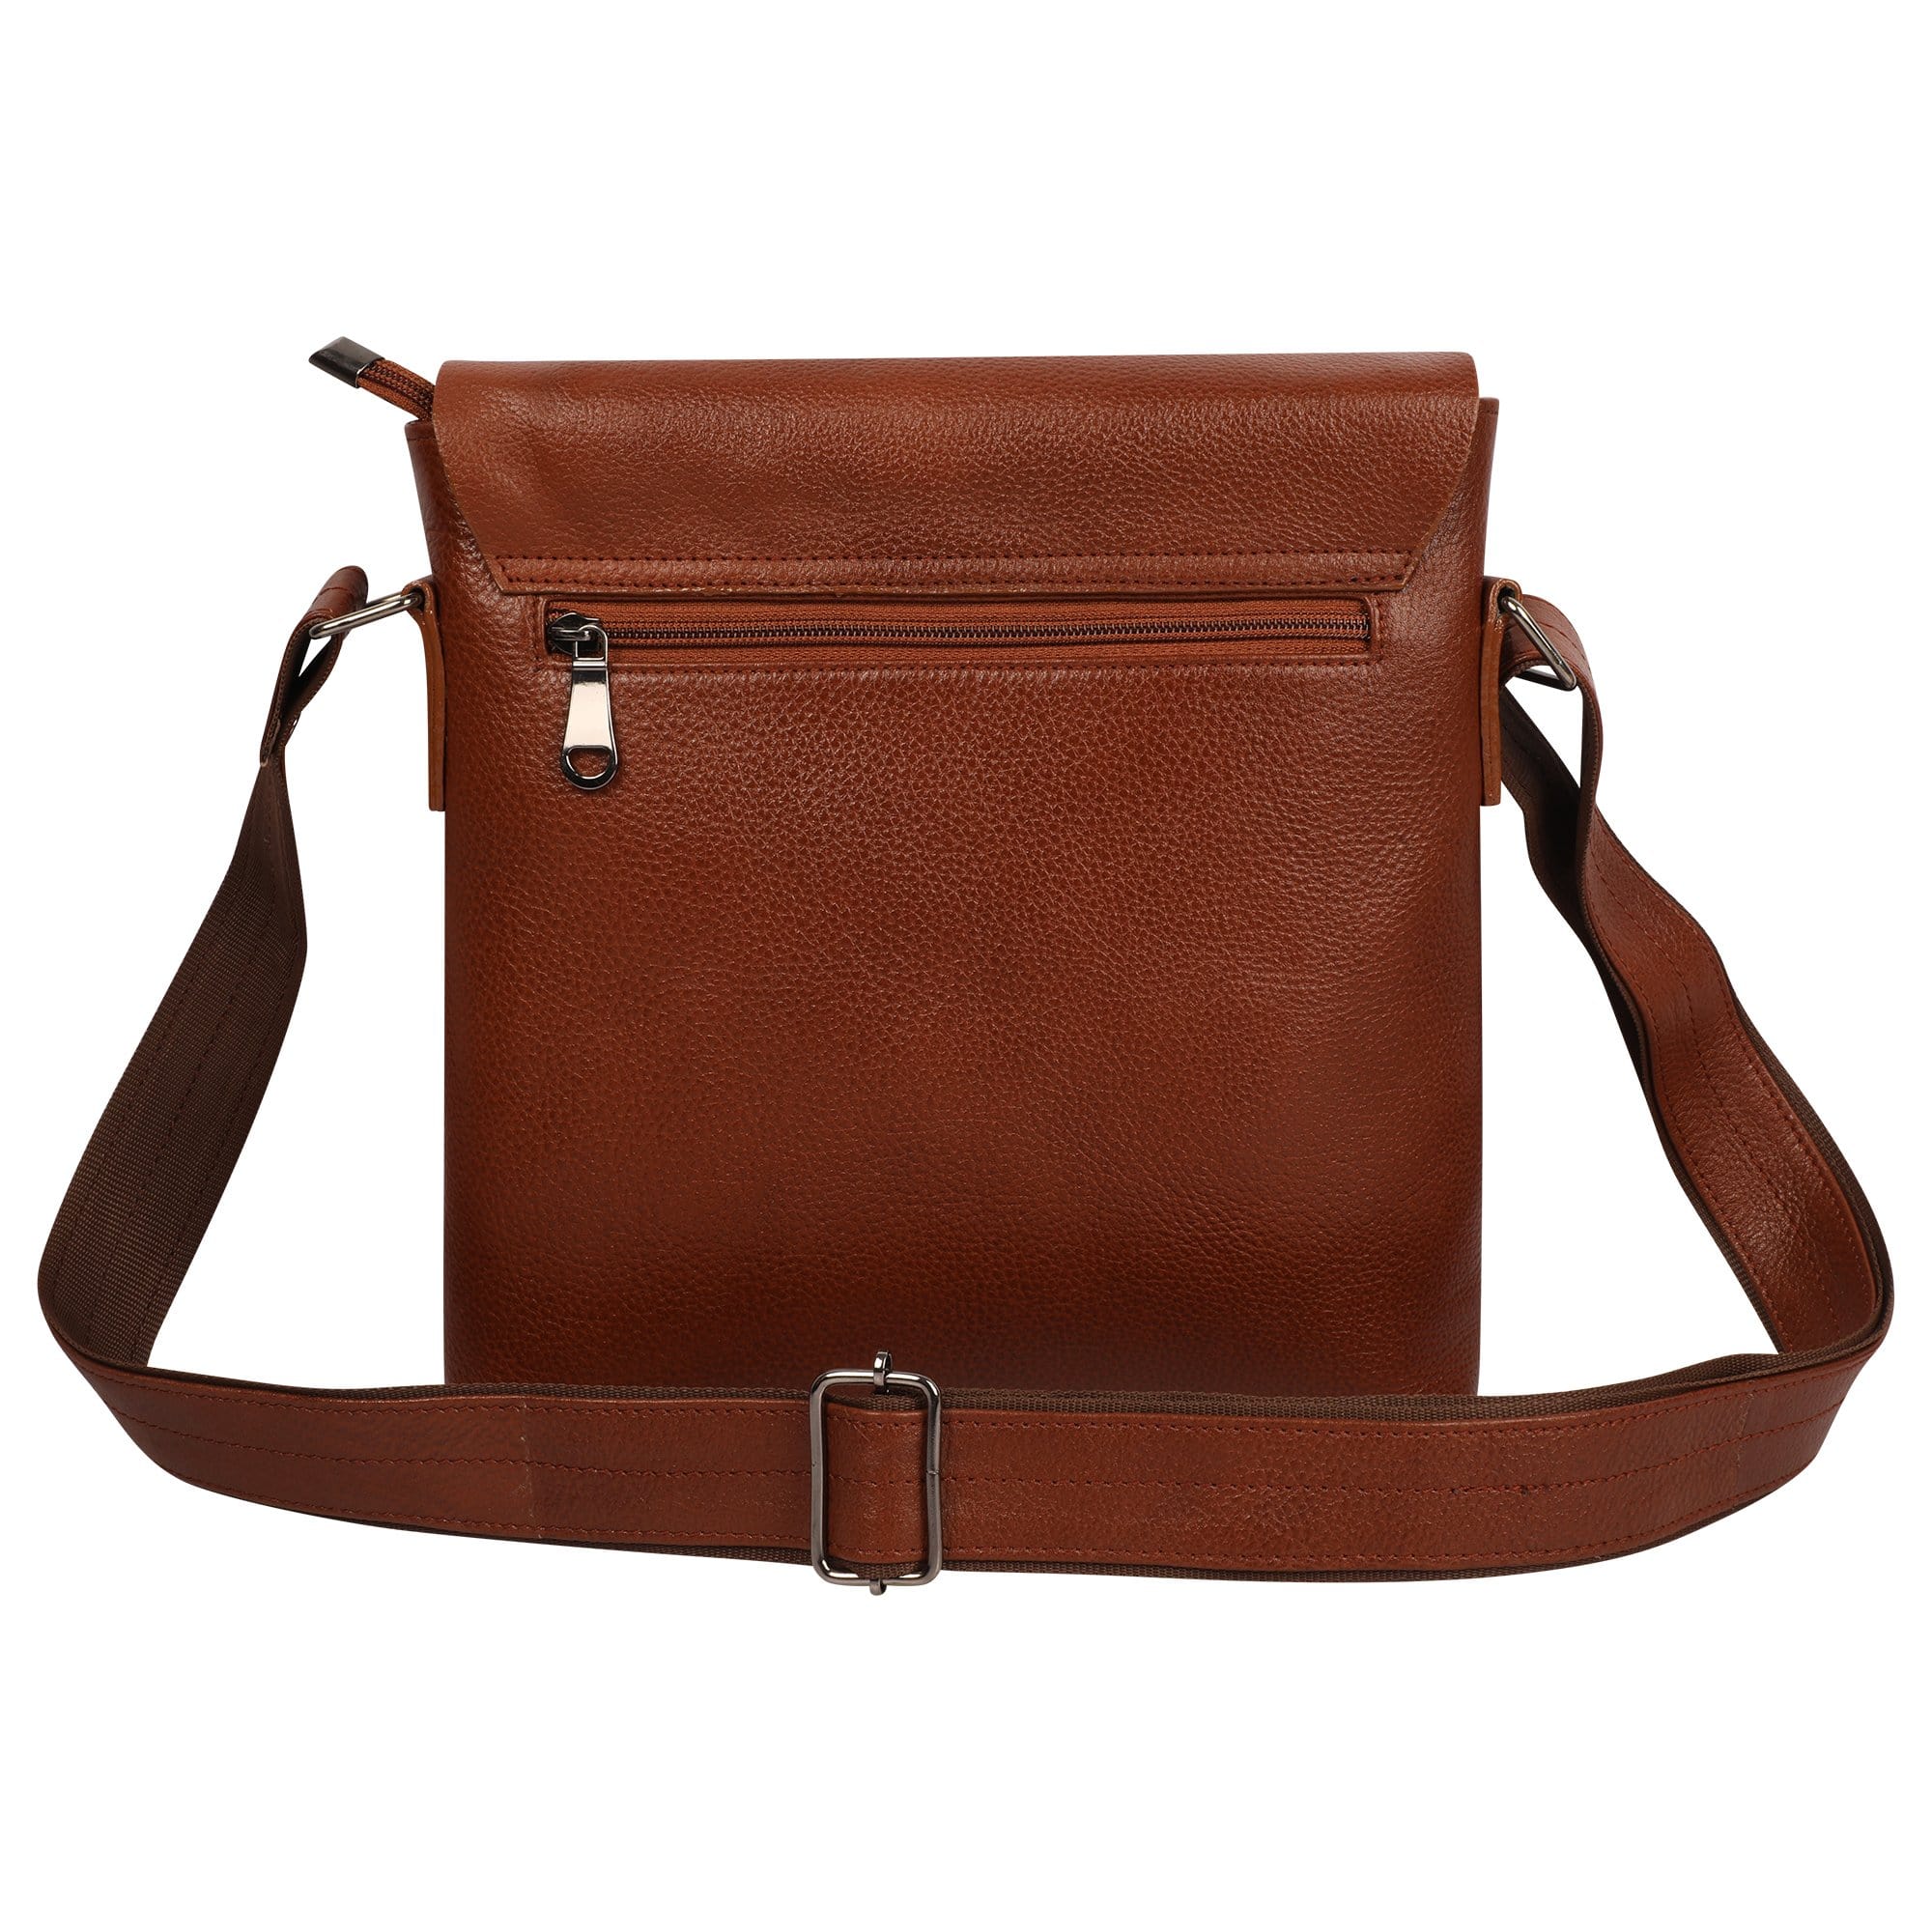 kinnoti Rich Brown Genuine Leather Messenger Bag